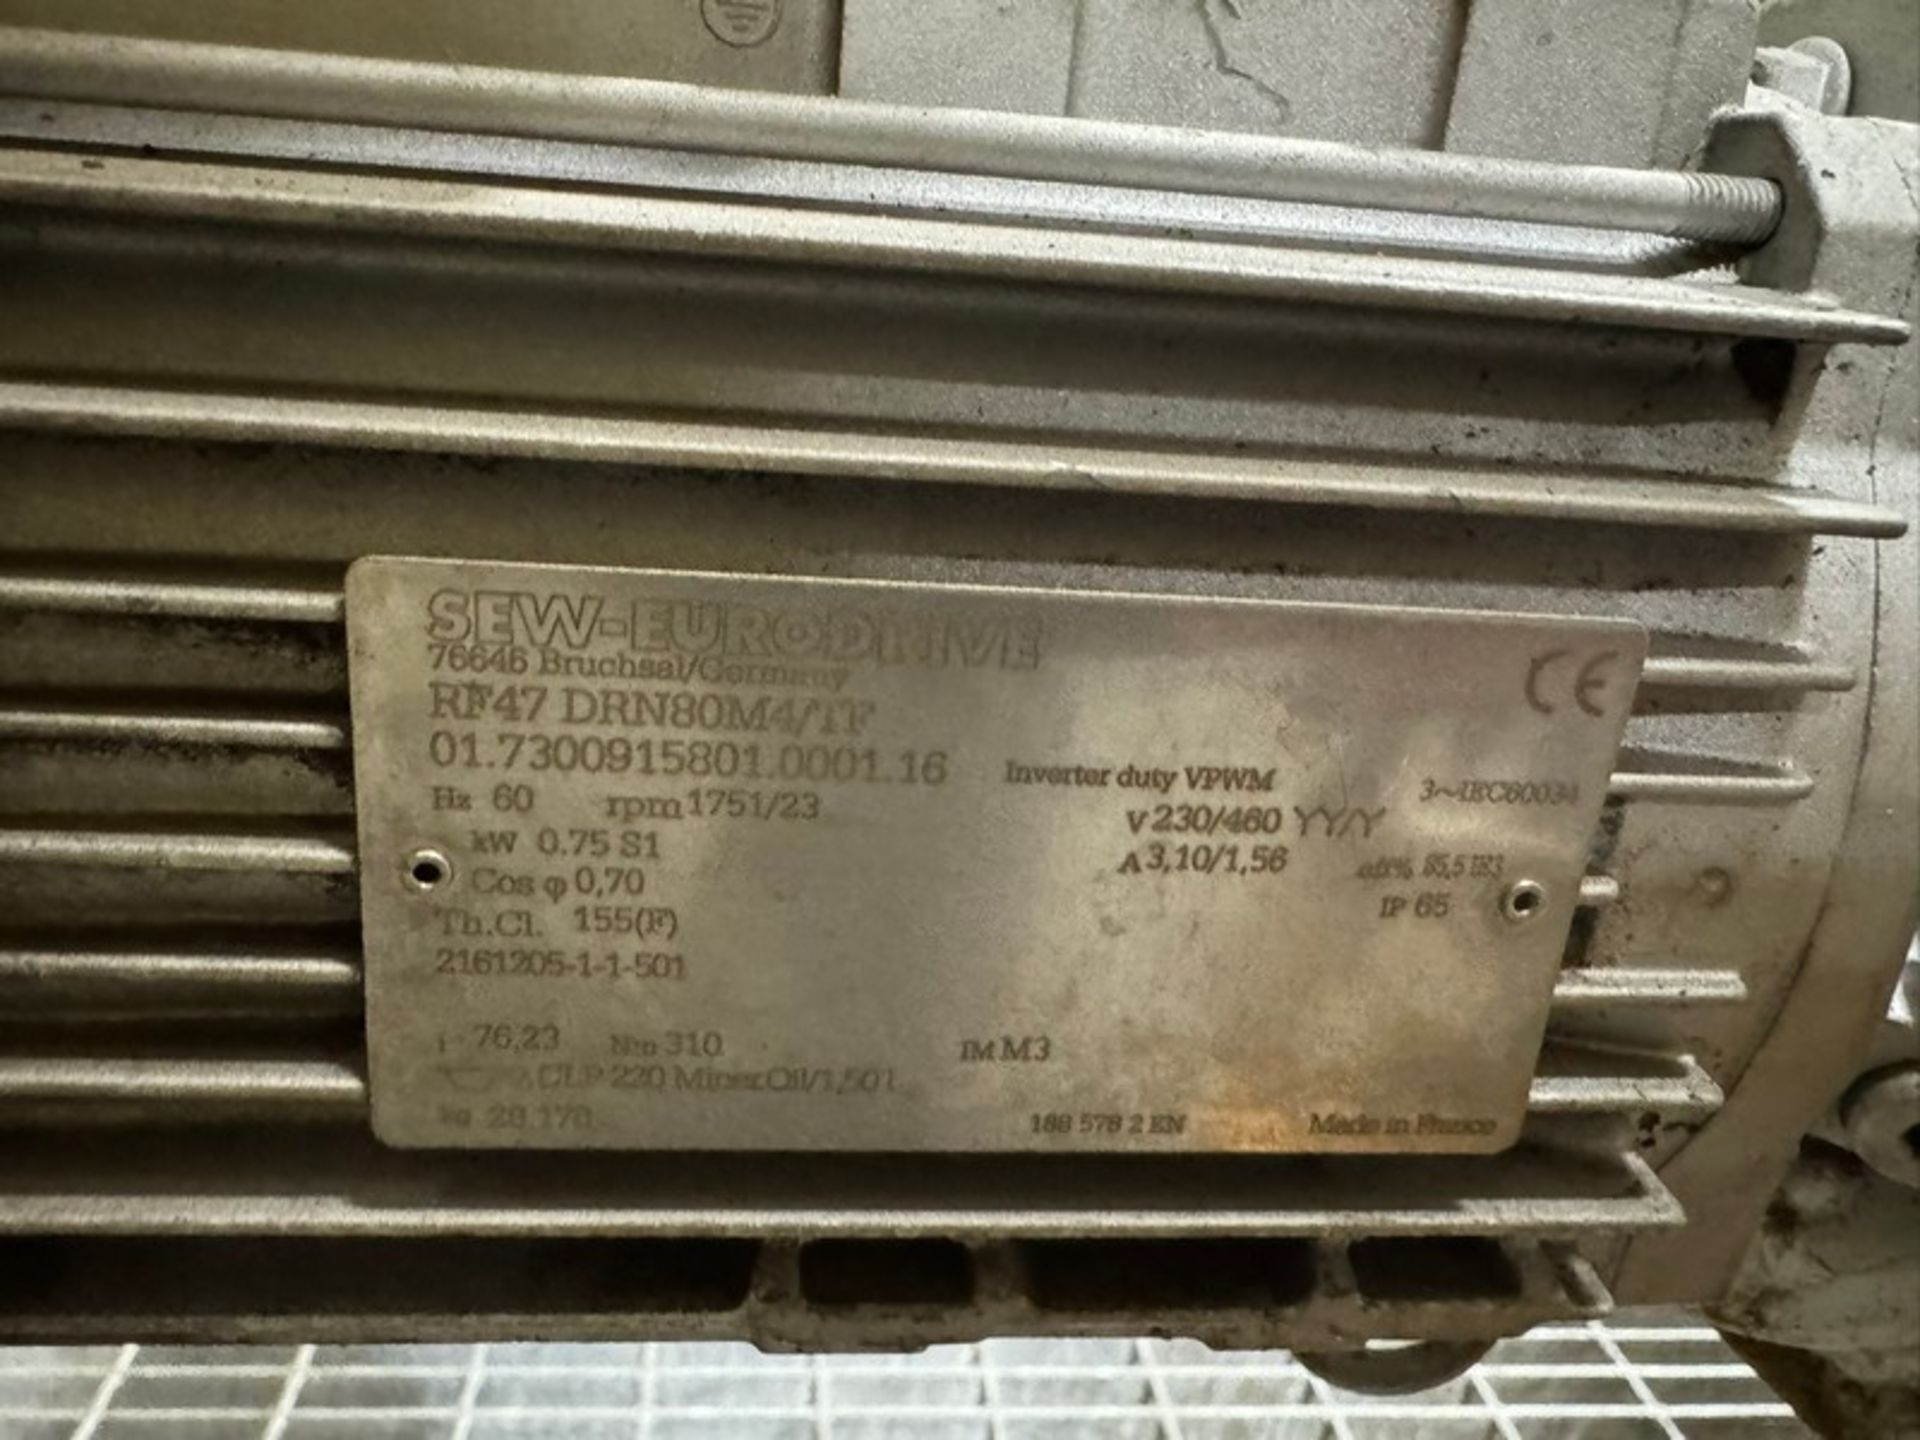 2006 Wartung der Öllager 55 kw Radial Hot Fan, Type: KXE 160-040030-60, S/N 212399, Includes - Image 14 of 14